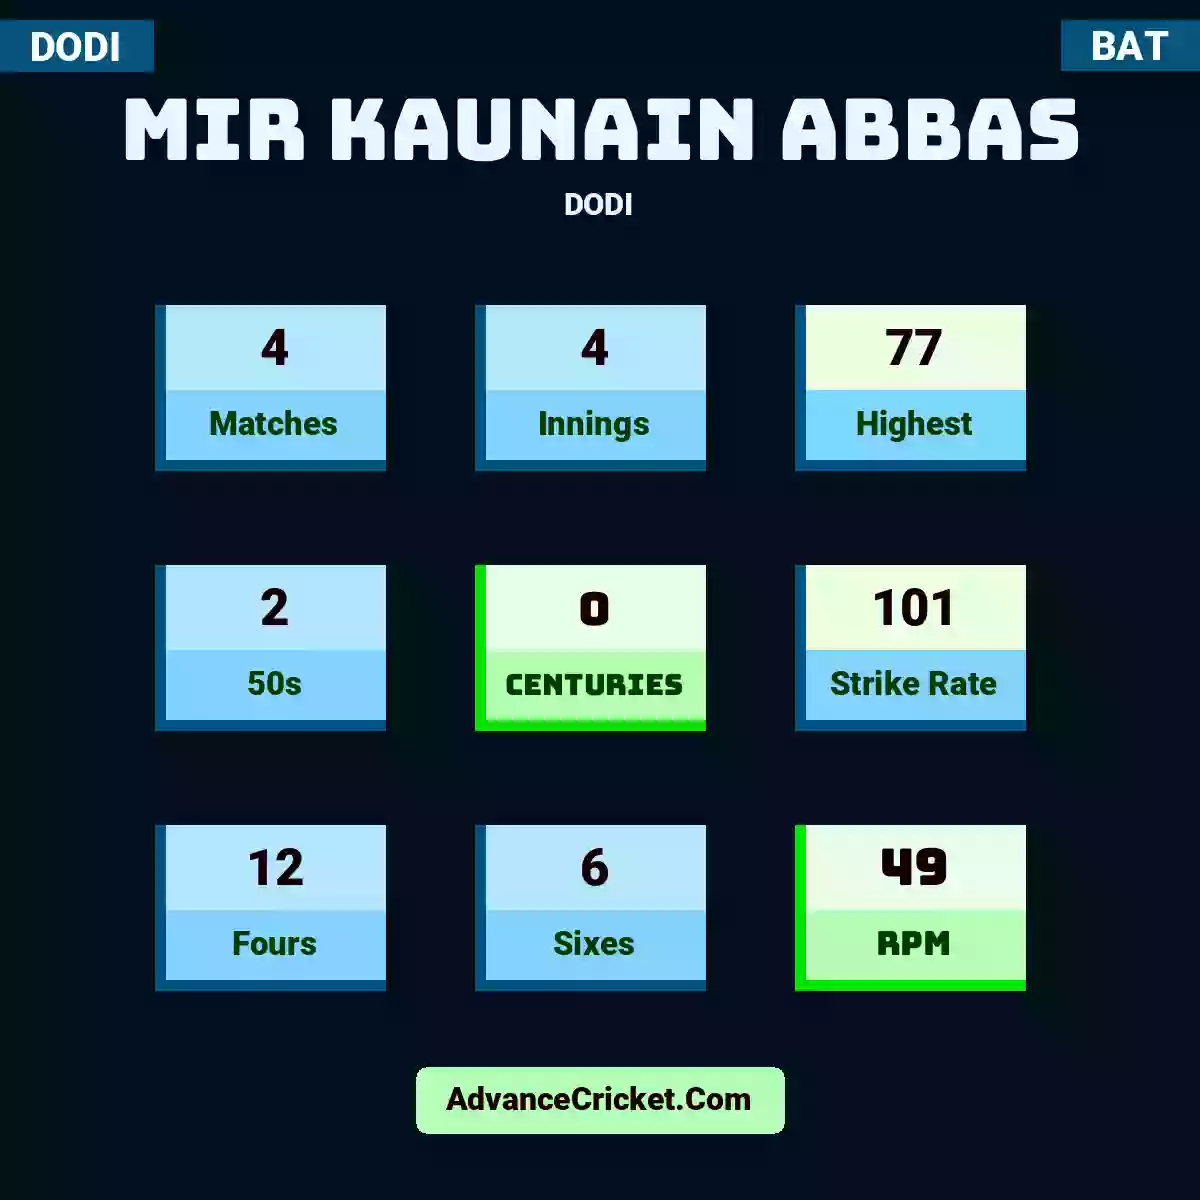 Mir Kaunain Abbas DODI , Mir Kaunain Abbas played 4 matches, scored 77 runs as highest, 2 half-centuries, and 0 centuries, with a strike rate of 101. M.Abbas hit 12 fours and 6 sixes, with an RPM of 49.